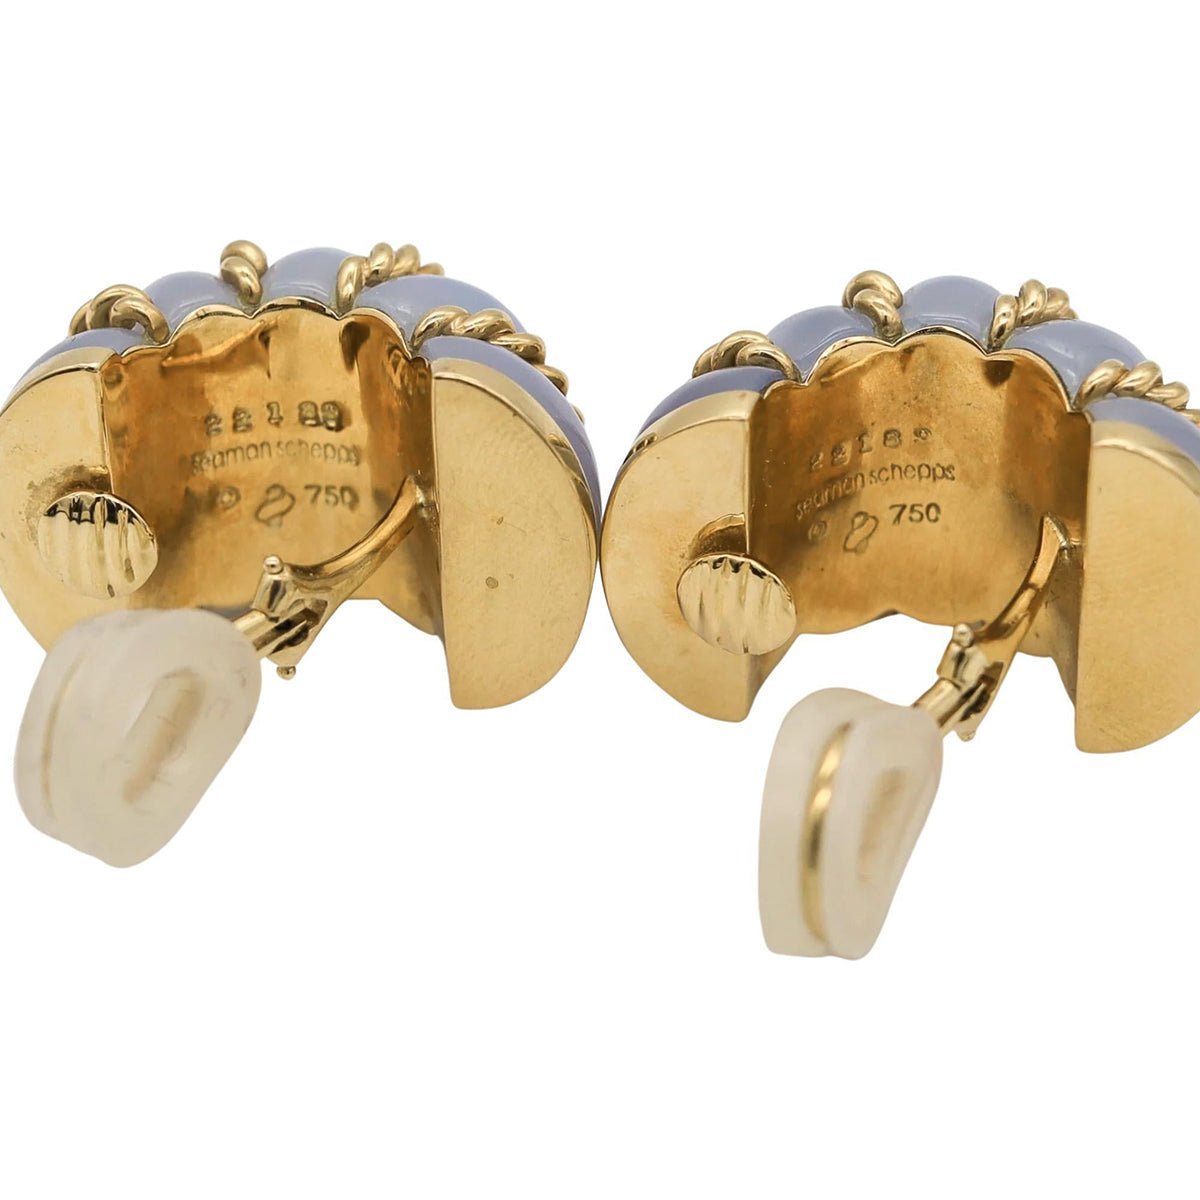 Seaman Schepps - 18k Yellow Gold Chalcedony Jumbo Shrimp Earrings